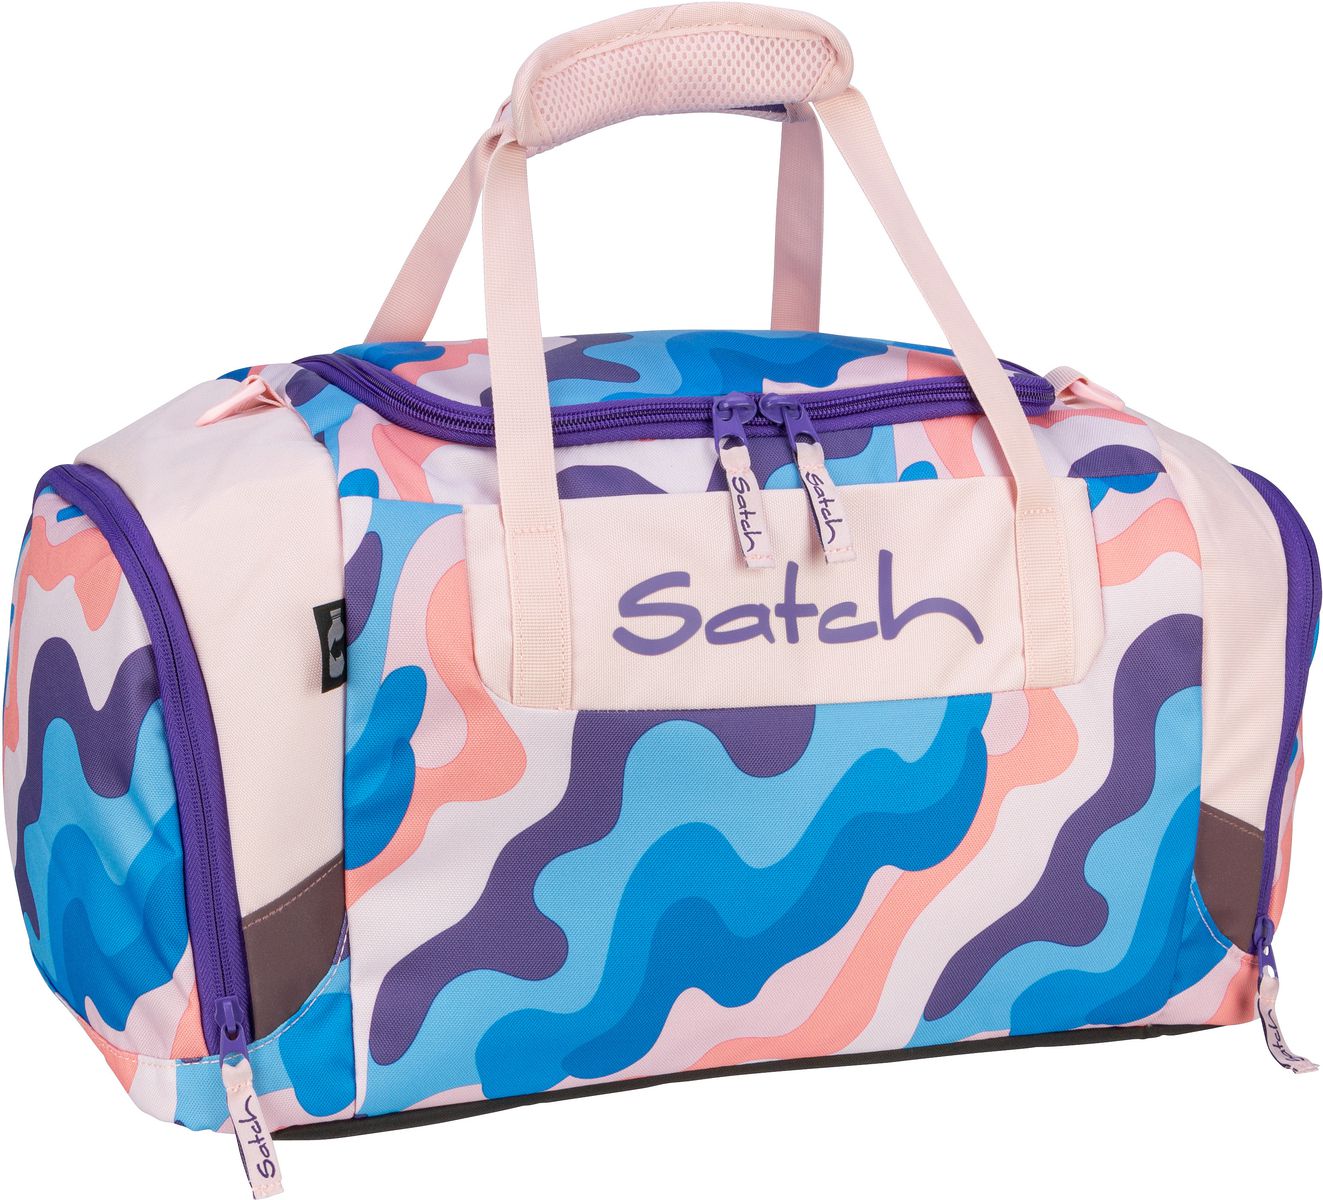 satch satch Sporttasche 2.0 - Candy Clouds